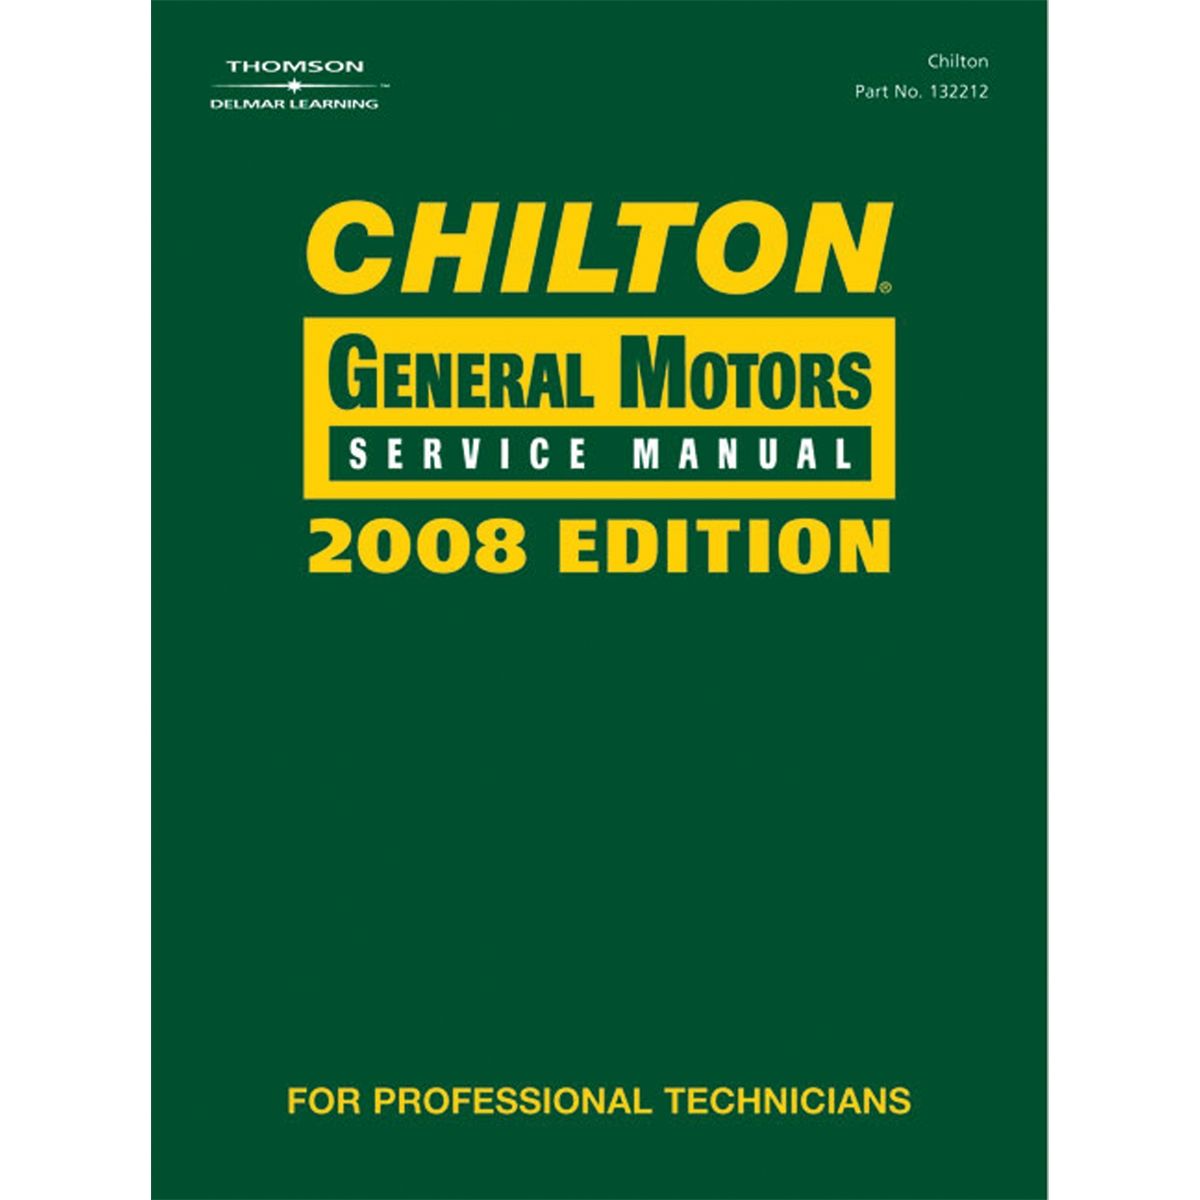 General Motors Service Manual - 2008 Edition Volume 1 & 2